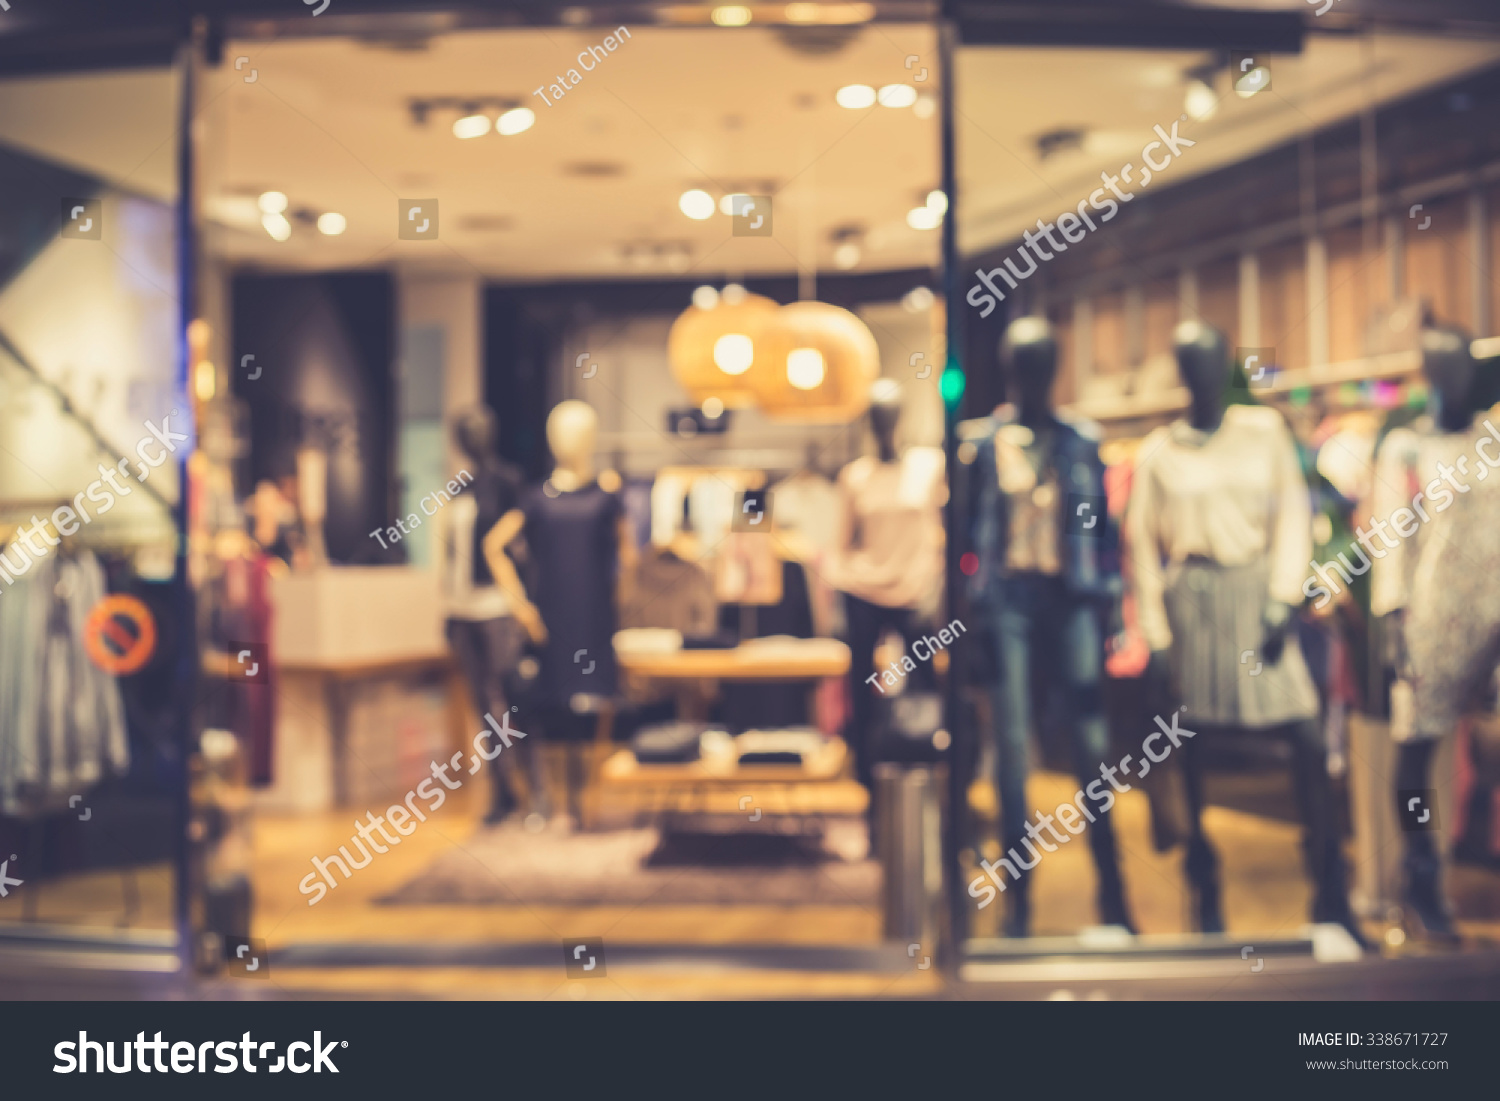 De Focused/Blur Image Of Boutique Window With Dressed Mannequins ...